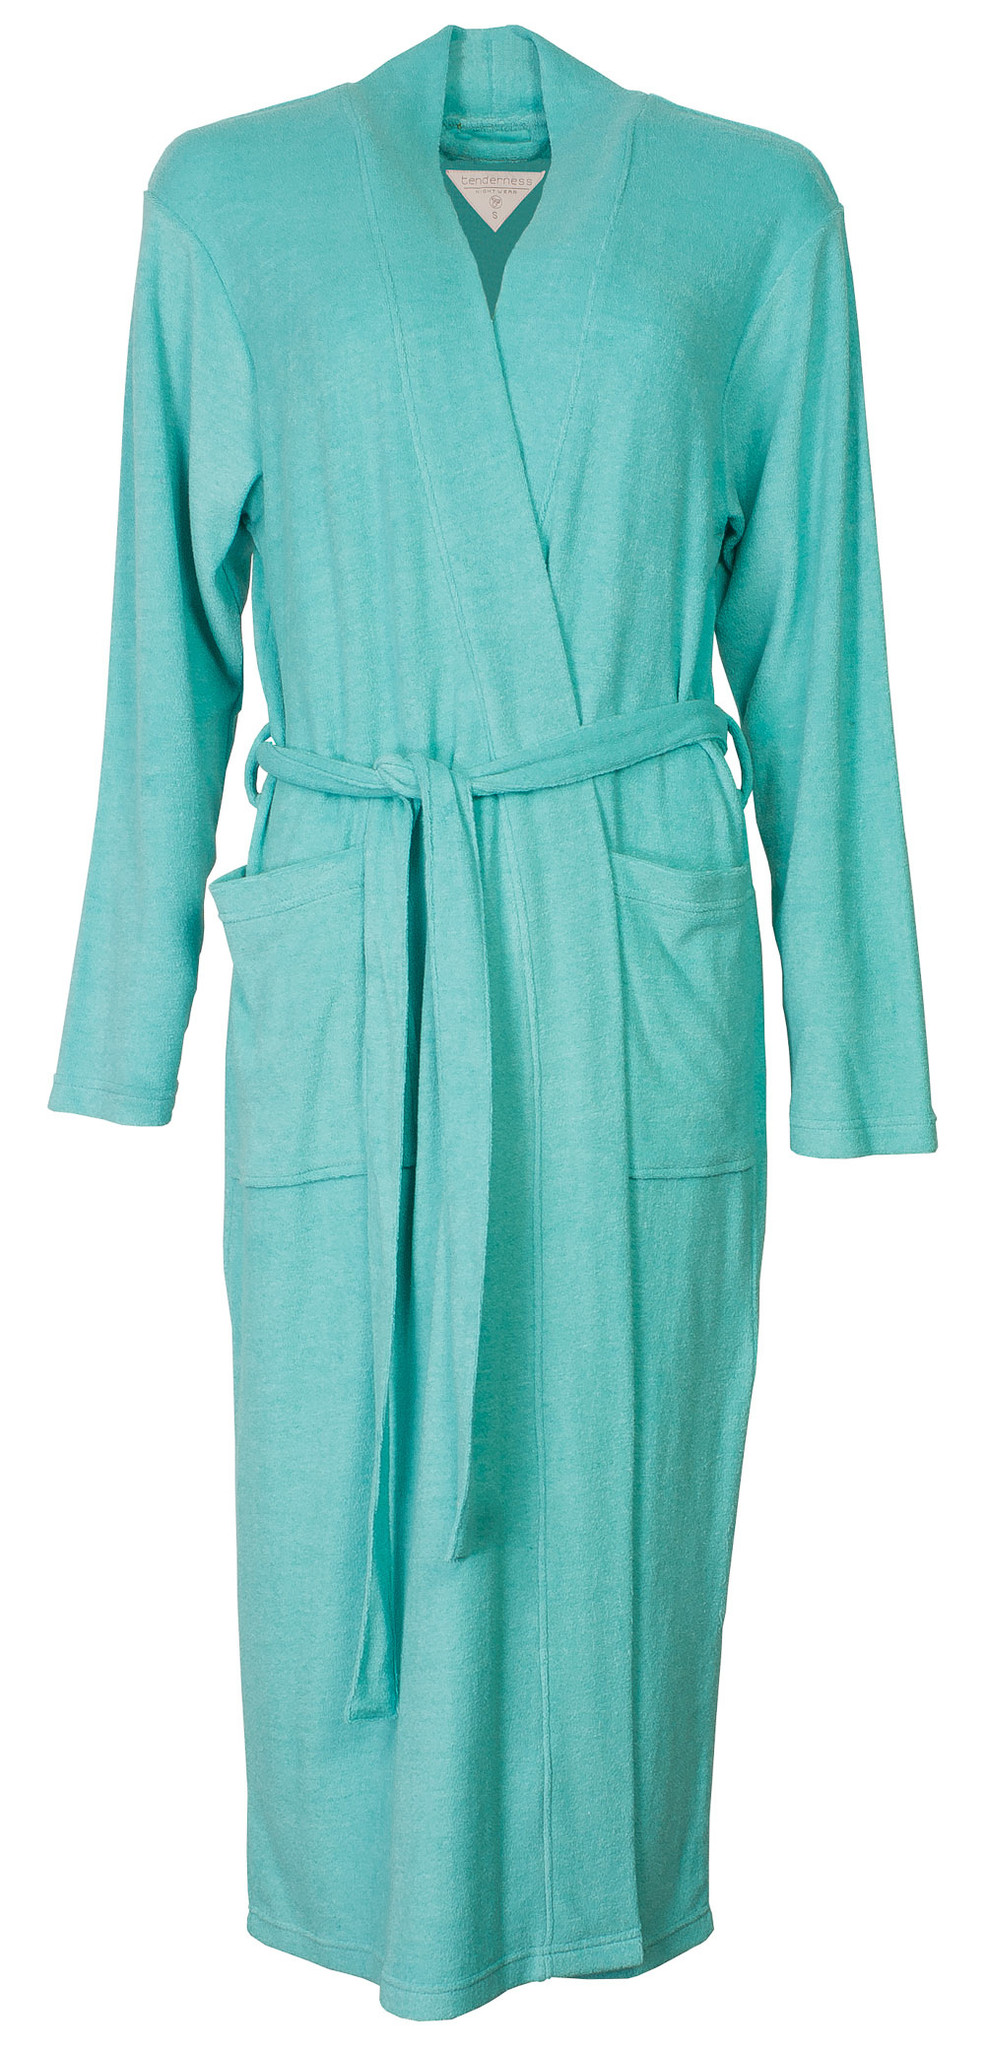 Rijd weg Verkoper Snazzy Tenderness Dames Badjas kamerjas dunne badstof Capri Blauw TEBRD1805C |  Pyjamaonline